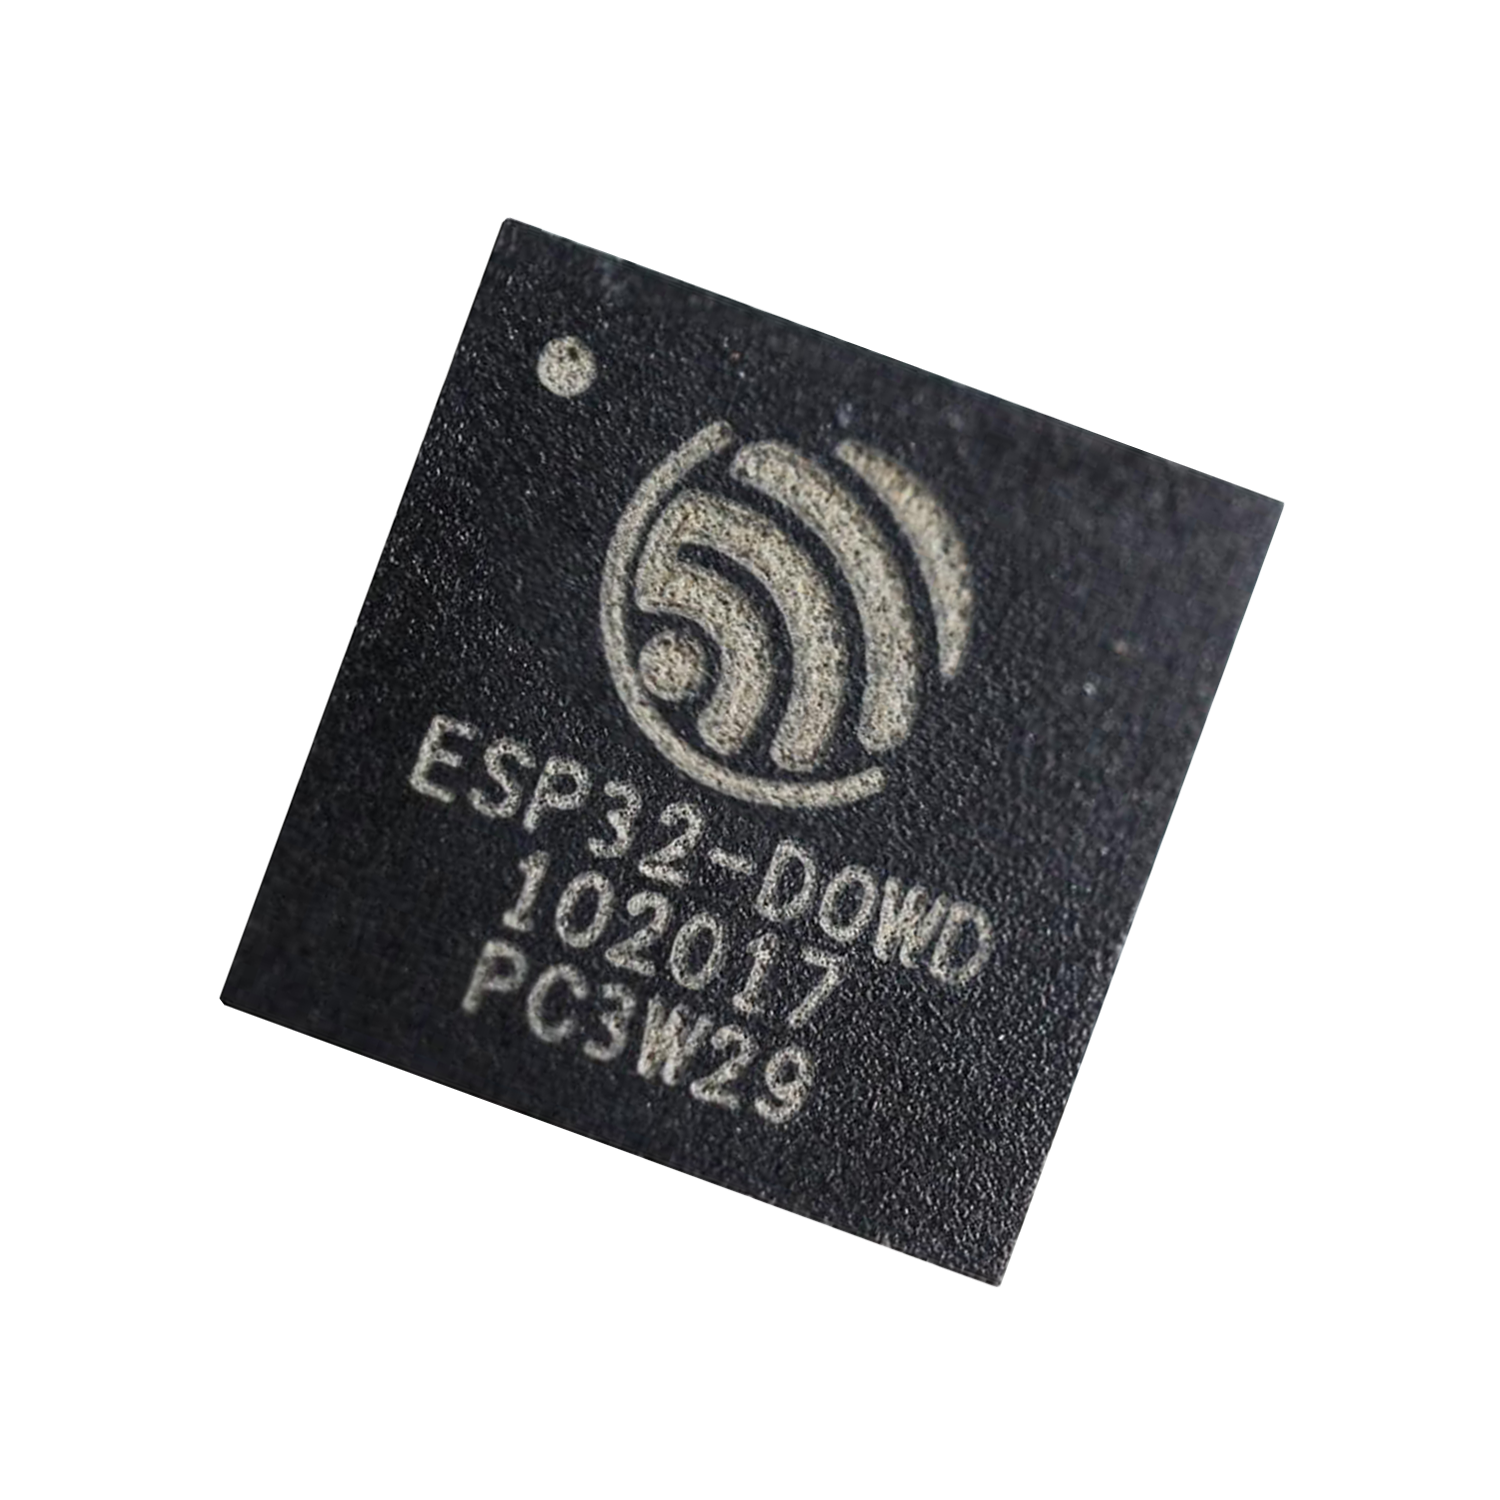  ESP32-D0WD Product Image 